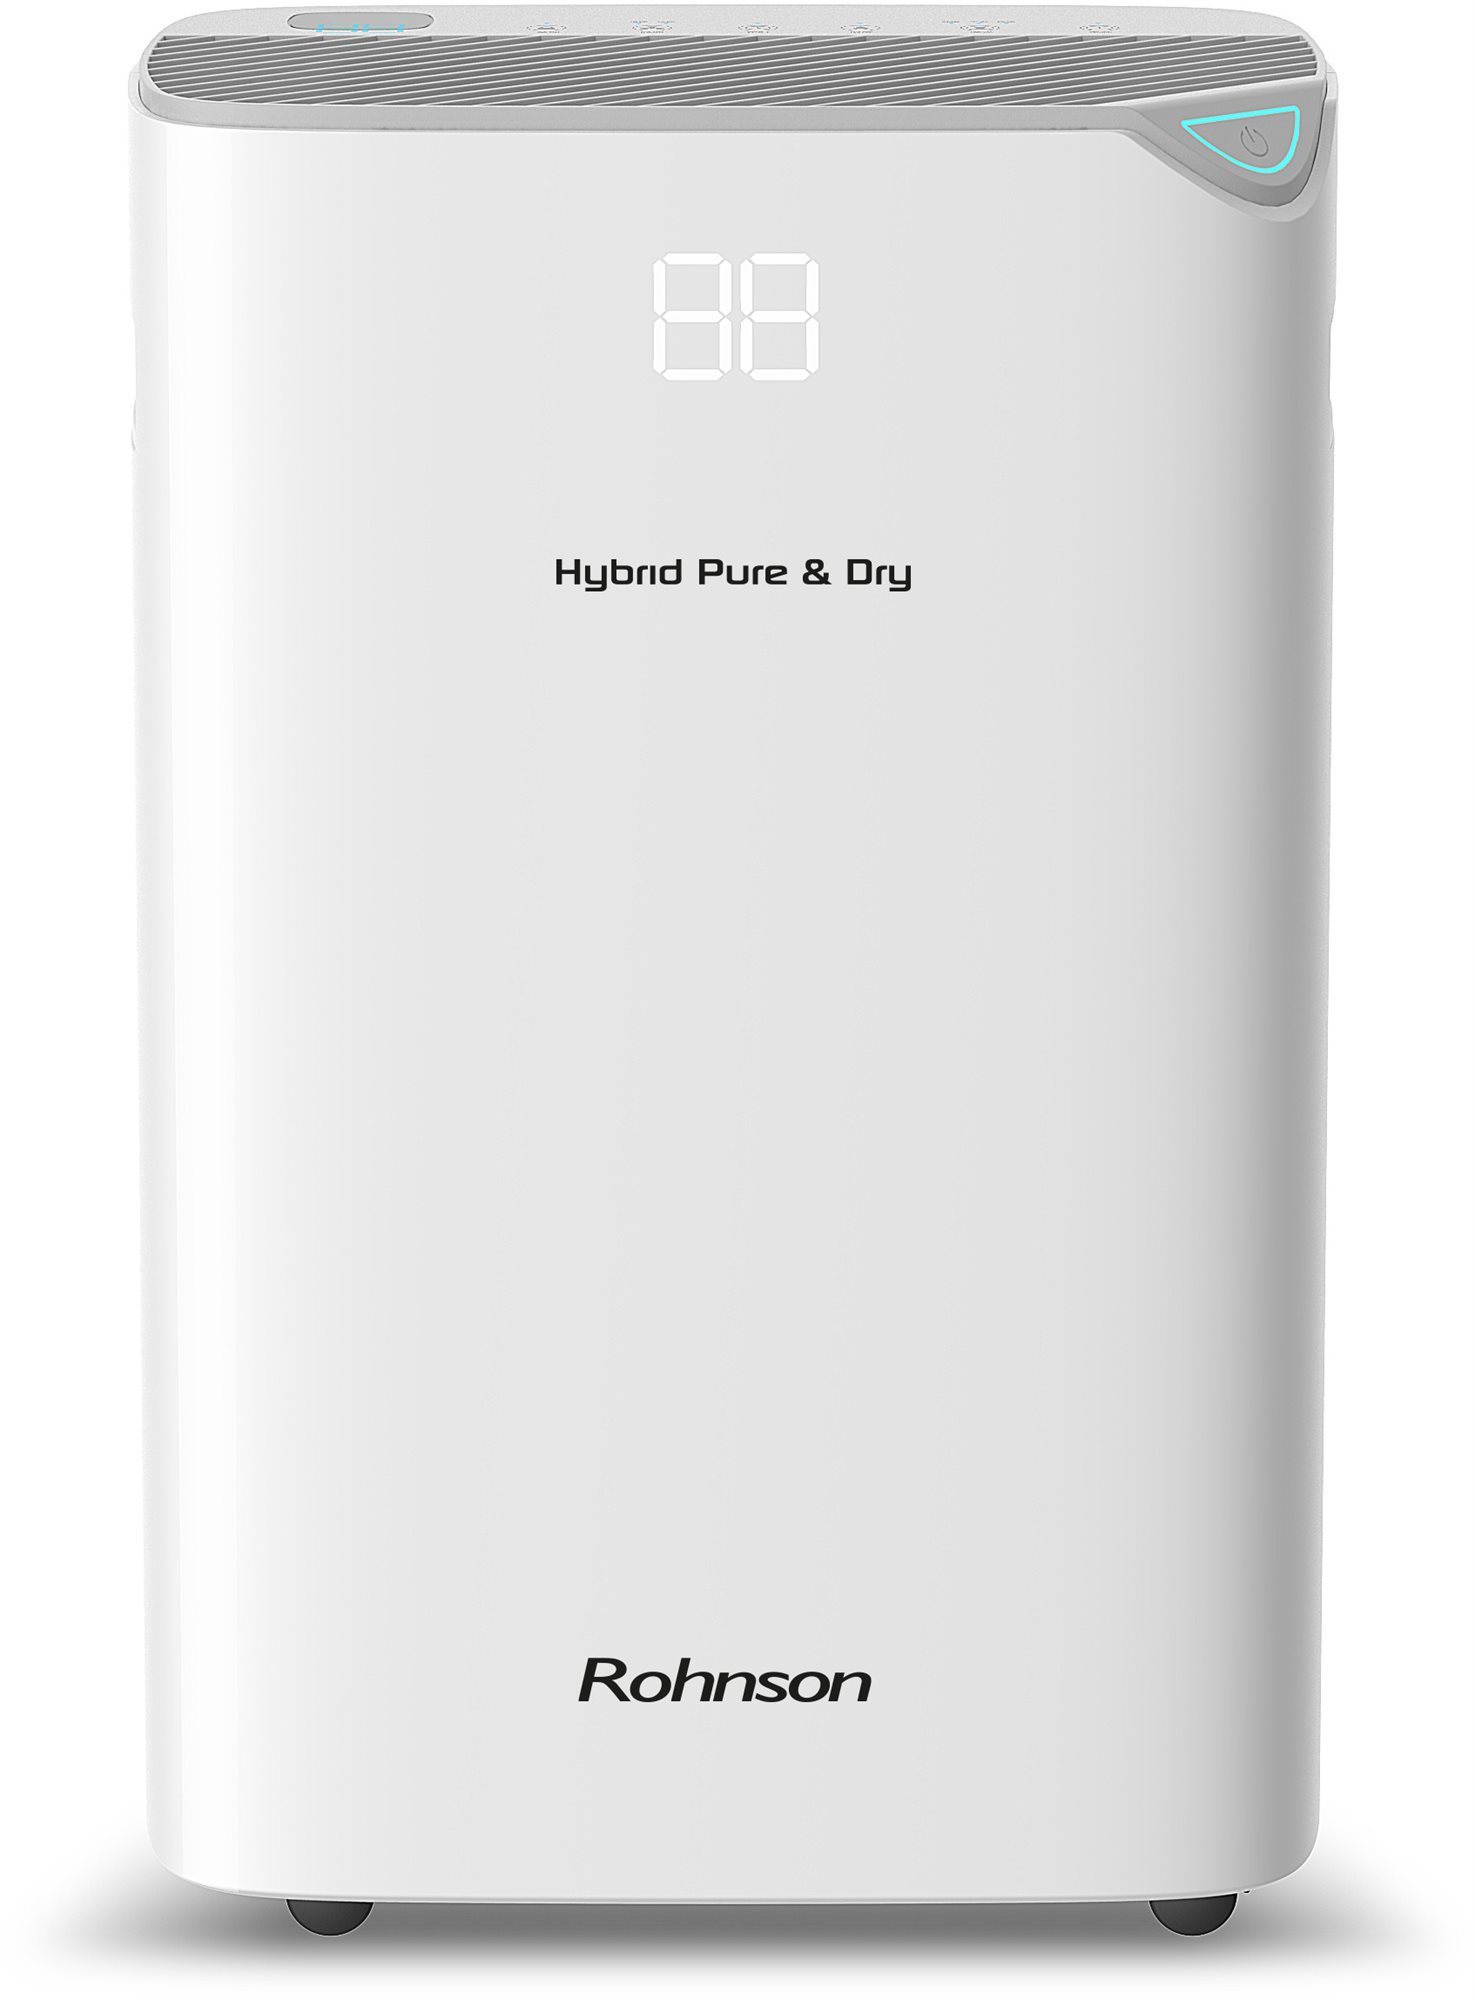 Rohnson R-91020 Hybrid Pure & Dry